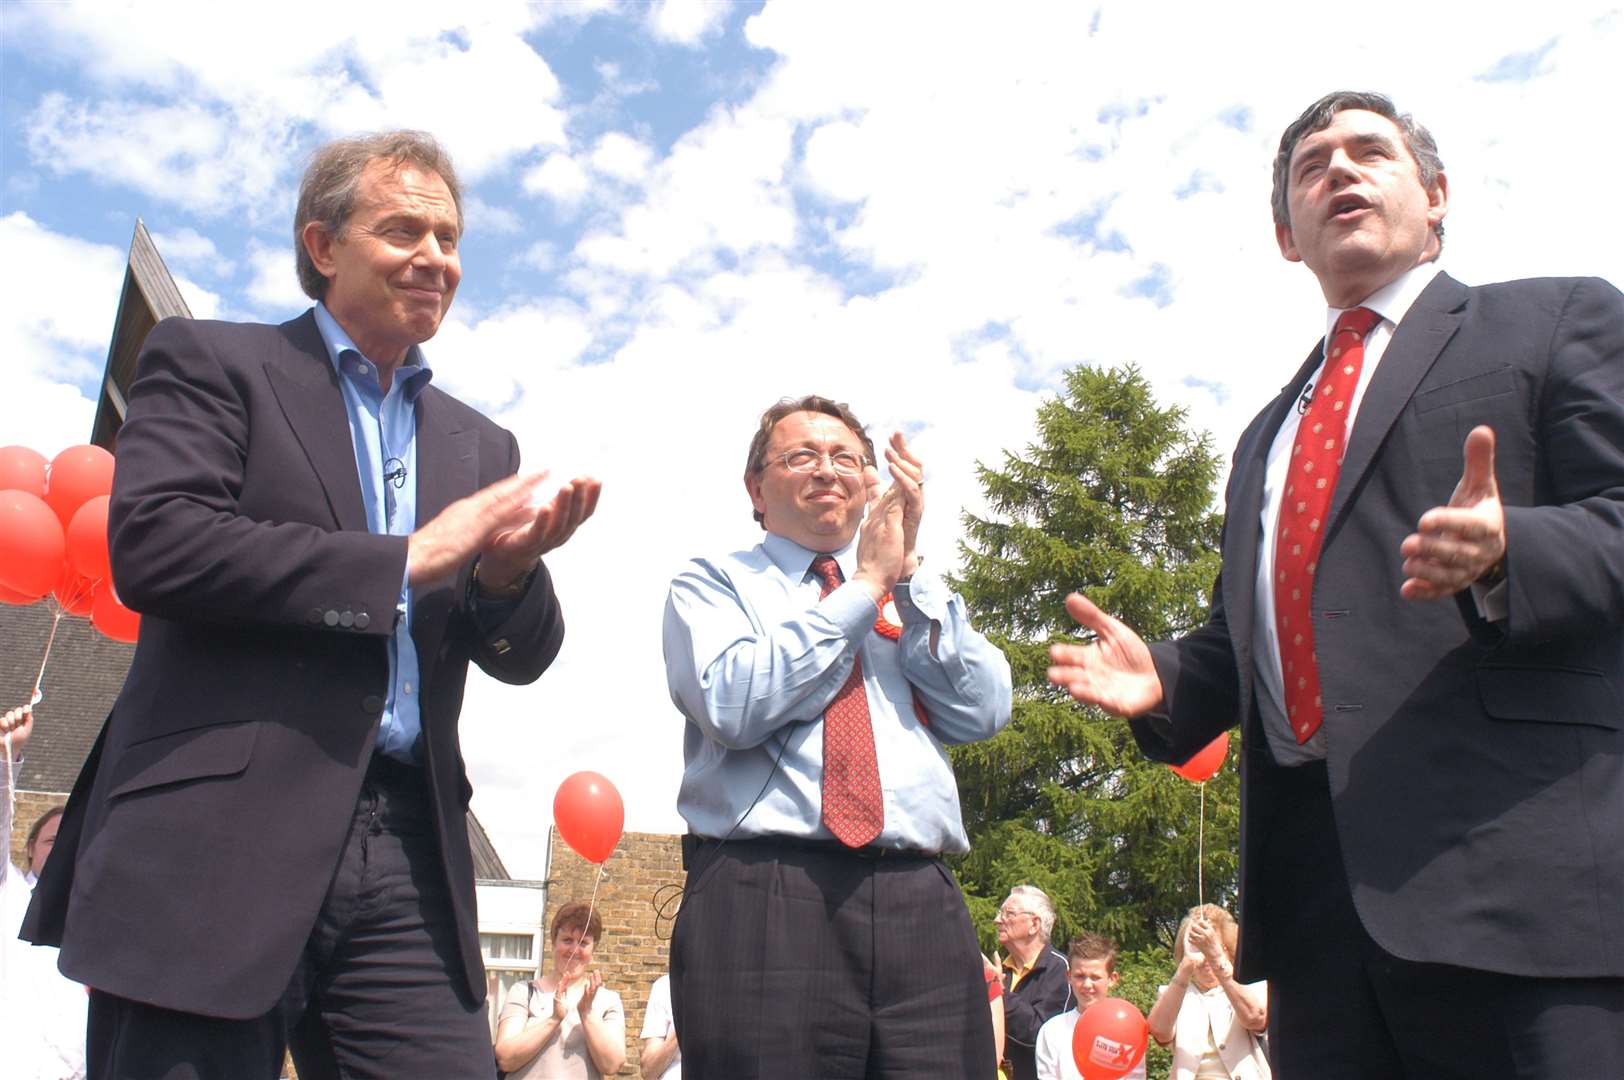 Former Gillingham MP Paul Clark with Tony Blair and Gordon Brown